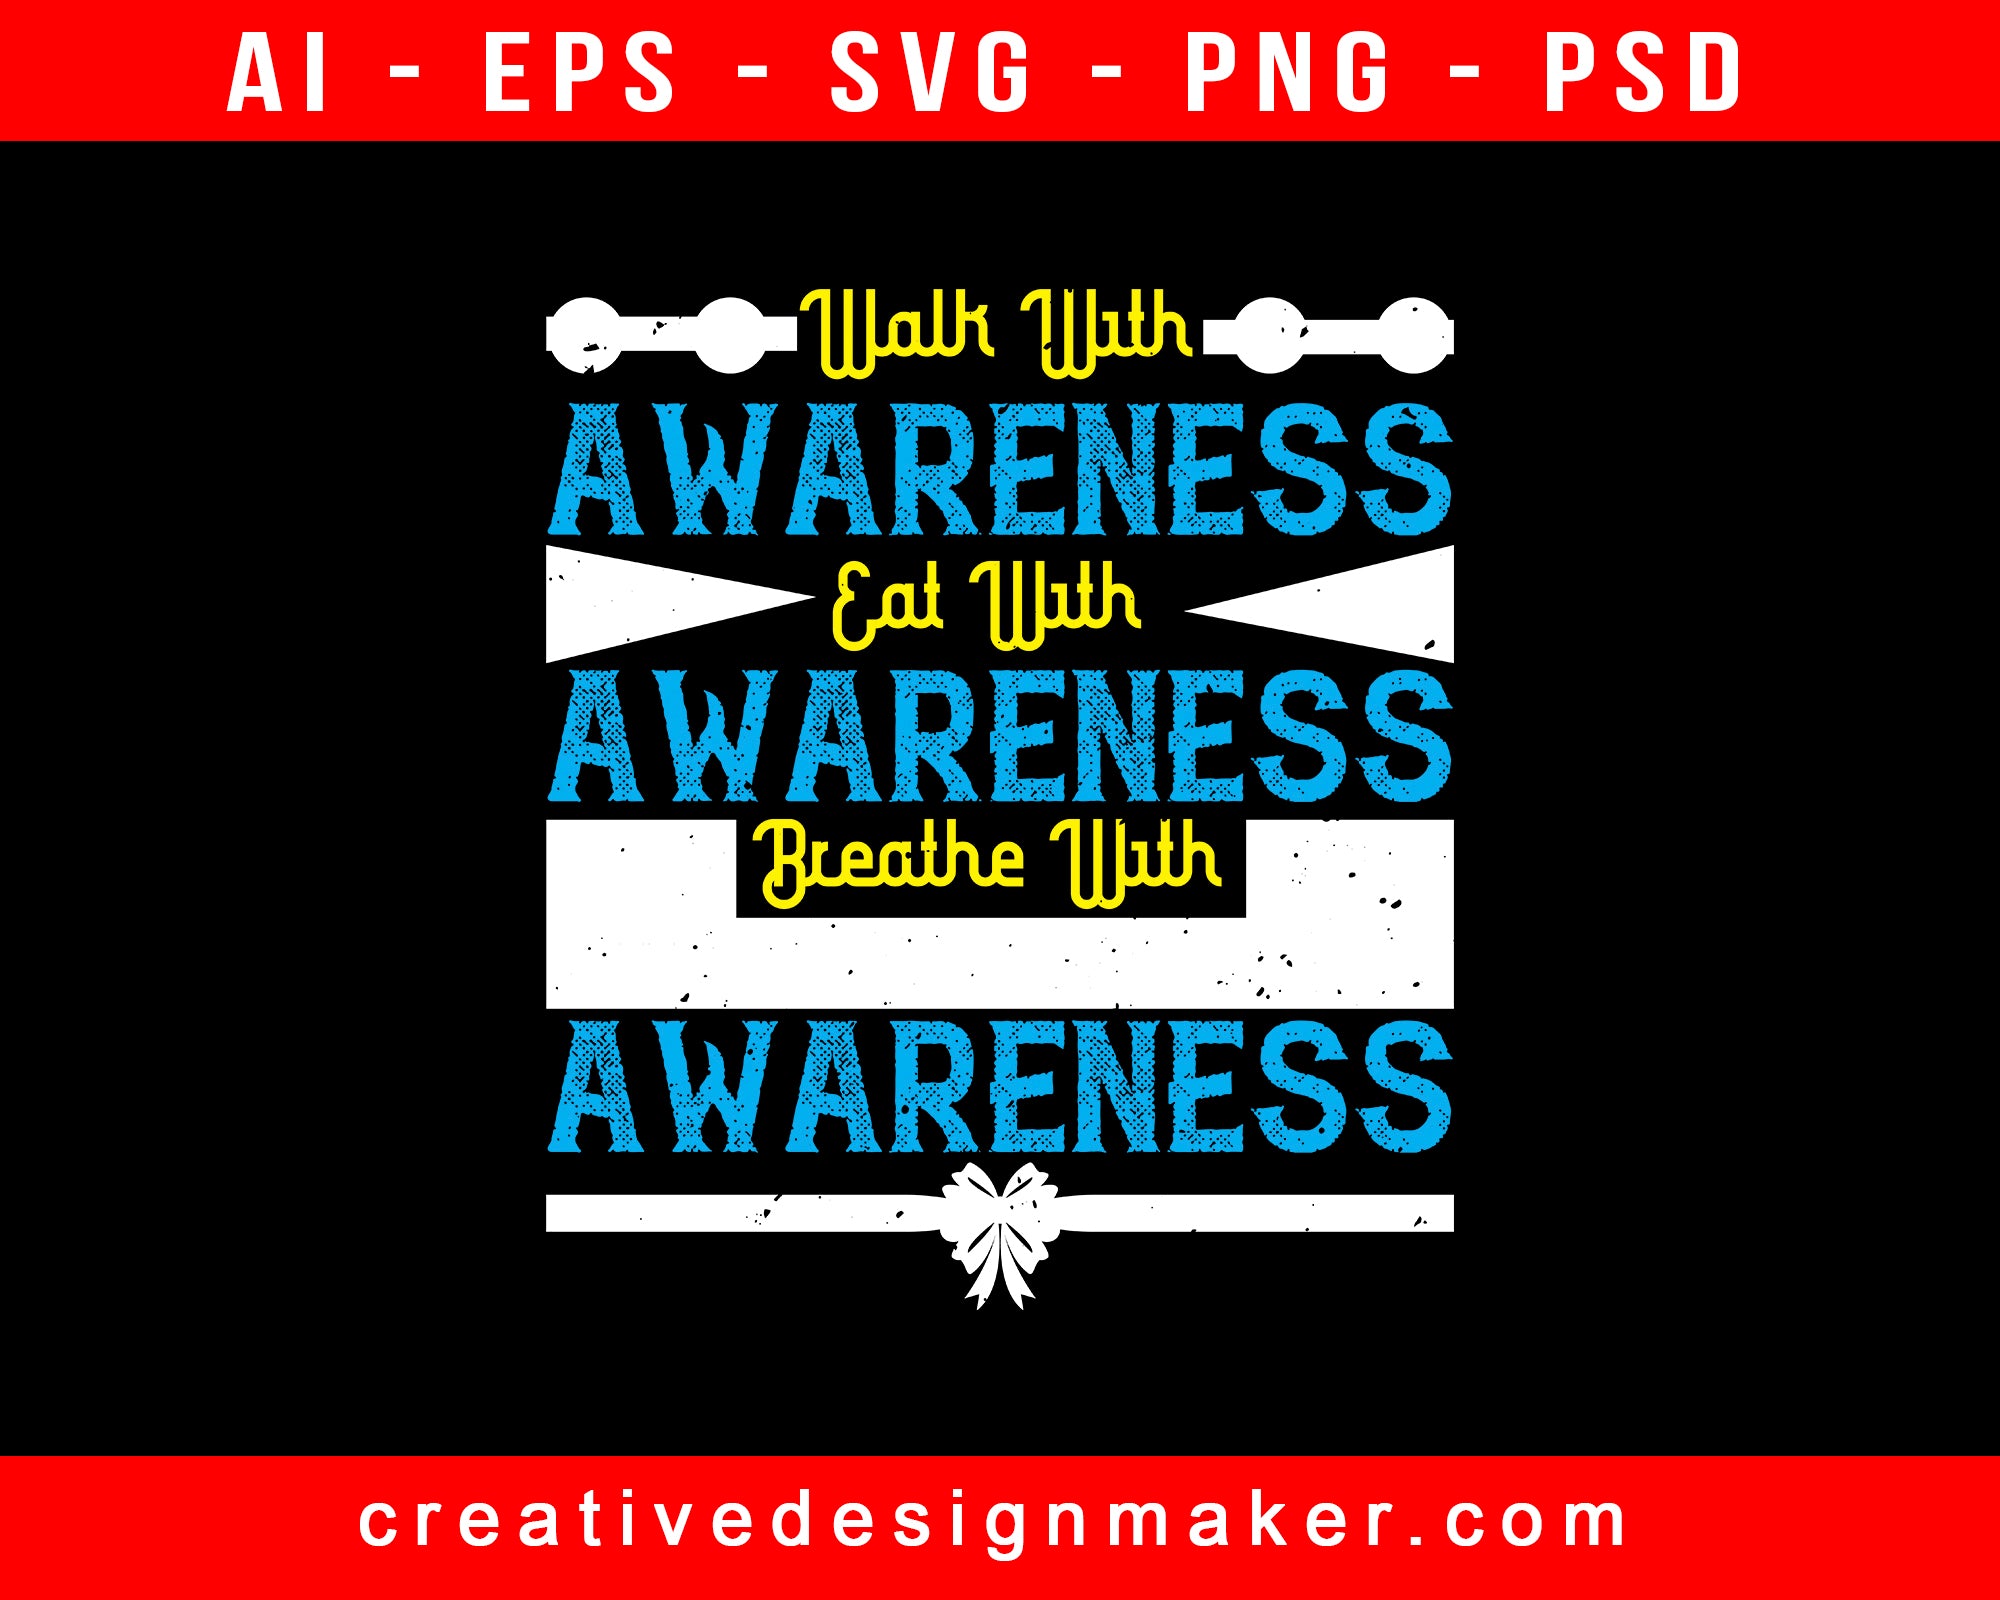 Walk, With Awareness. Eat, With Awareness. Breathe, With Awareness Print Ready Editable T-Shirt SVG Design!